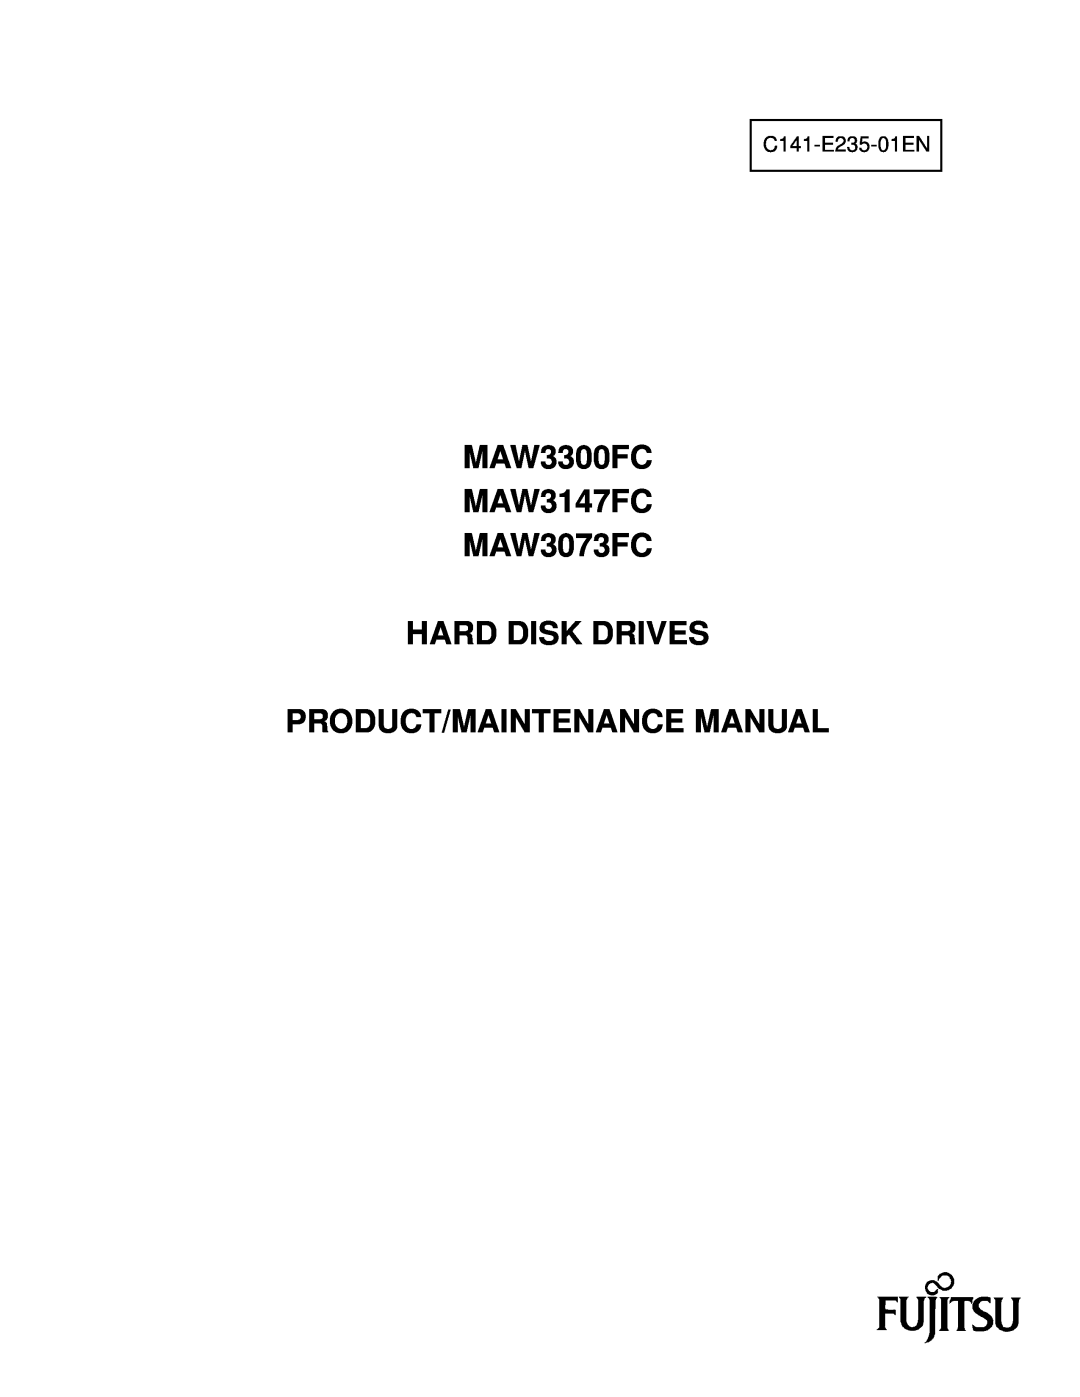 Fujitsu MAW3073fc manual MAW3300FC MAW3147FC MAW3073FC HARD DISK DRIVES, Product/Maintenance Manual, C141-E235-01EN 